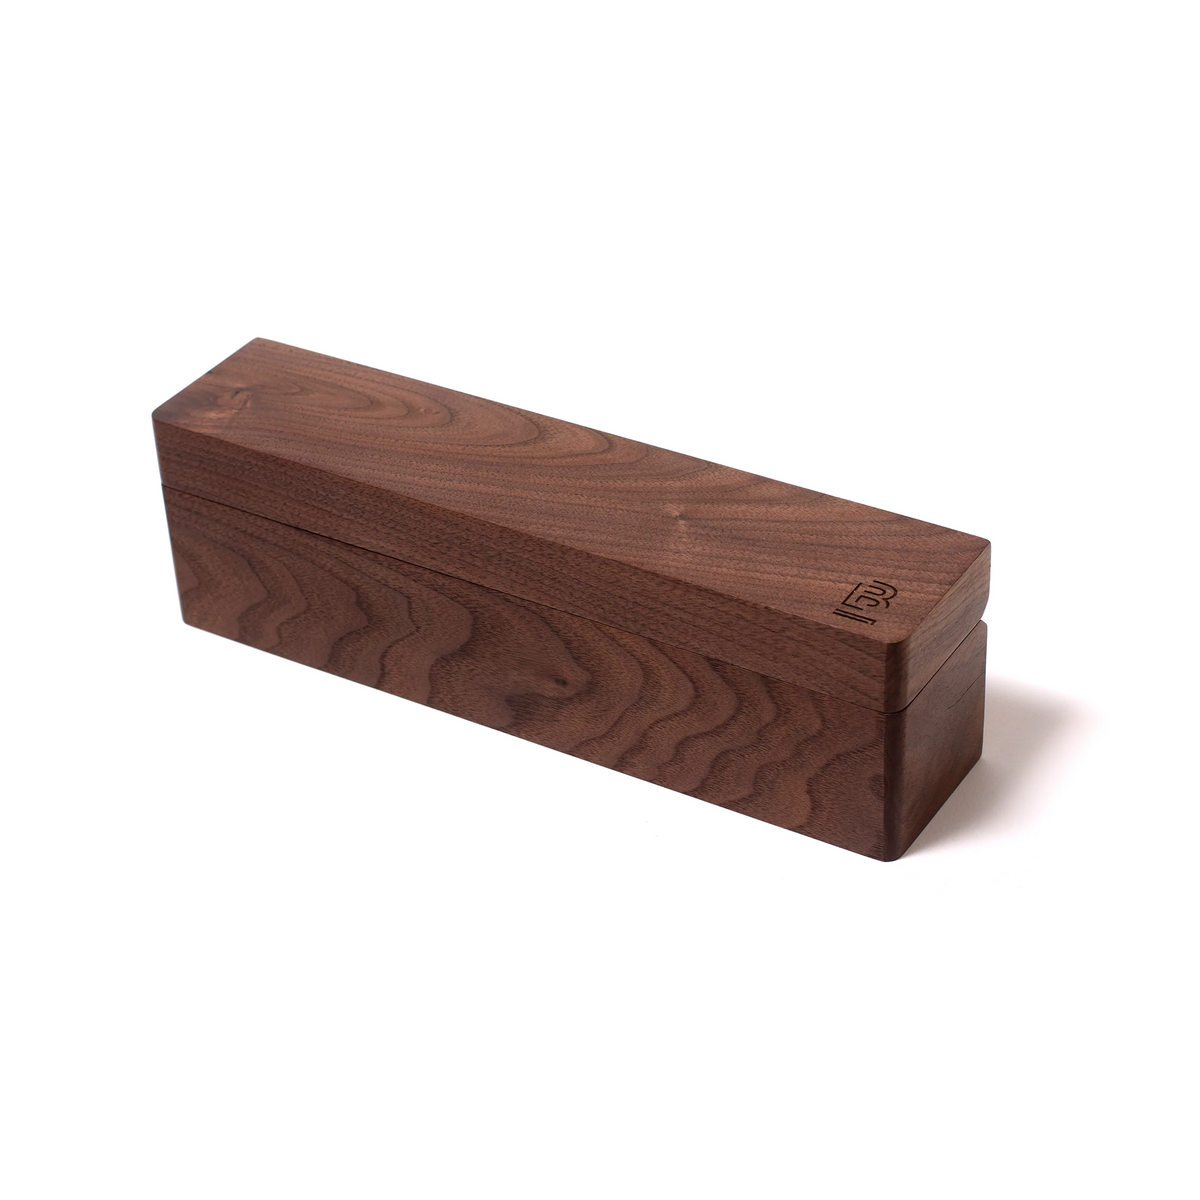 Blackwing Wood Box Gift Set